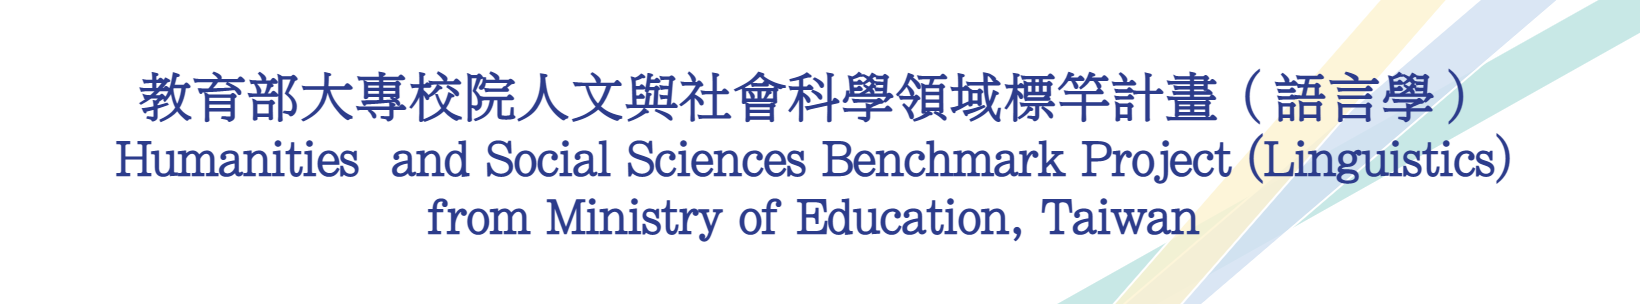 教育部大專校院人文與社會科學領域標竿計畫（語言學）Humanities and Social Sciences Benchmark Project (Linguistics) from Ministry of Education, Taiwan